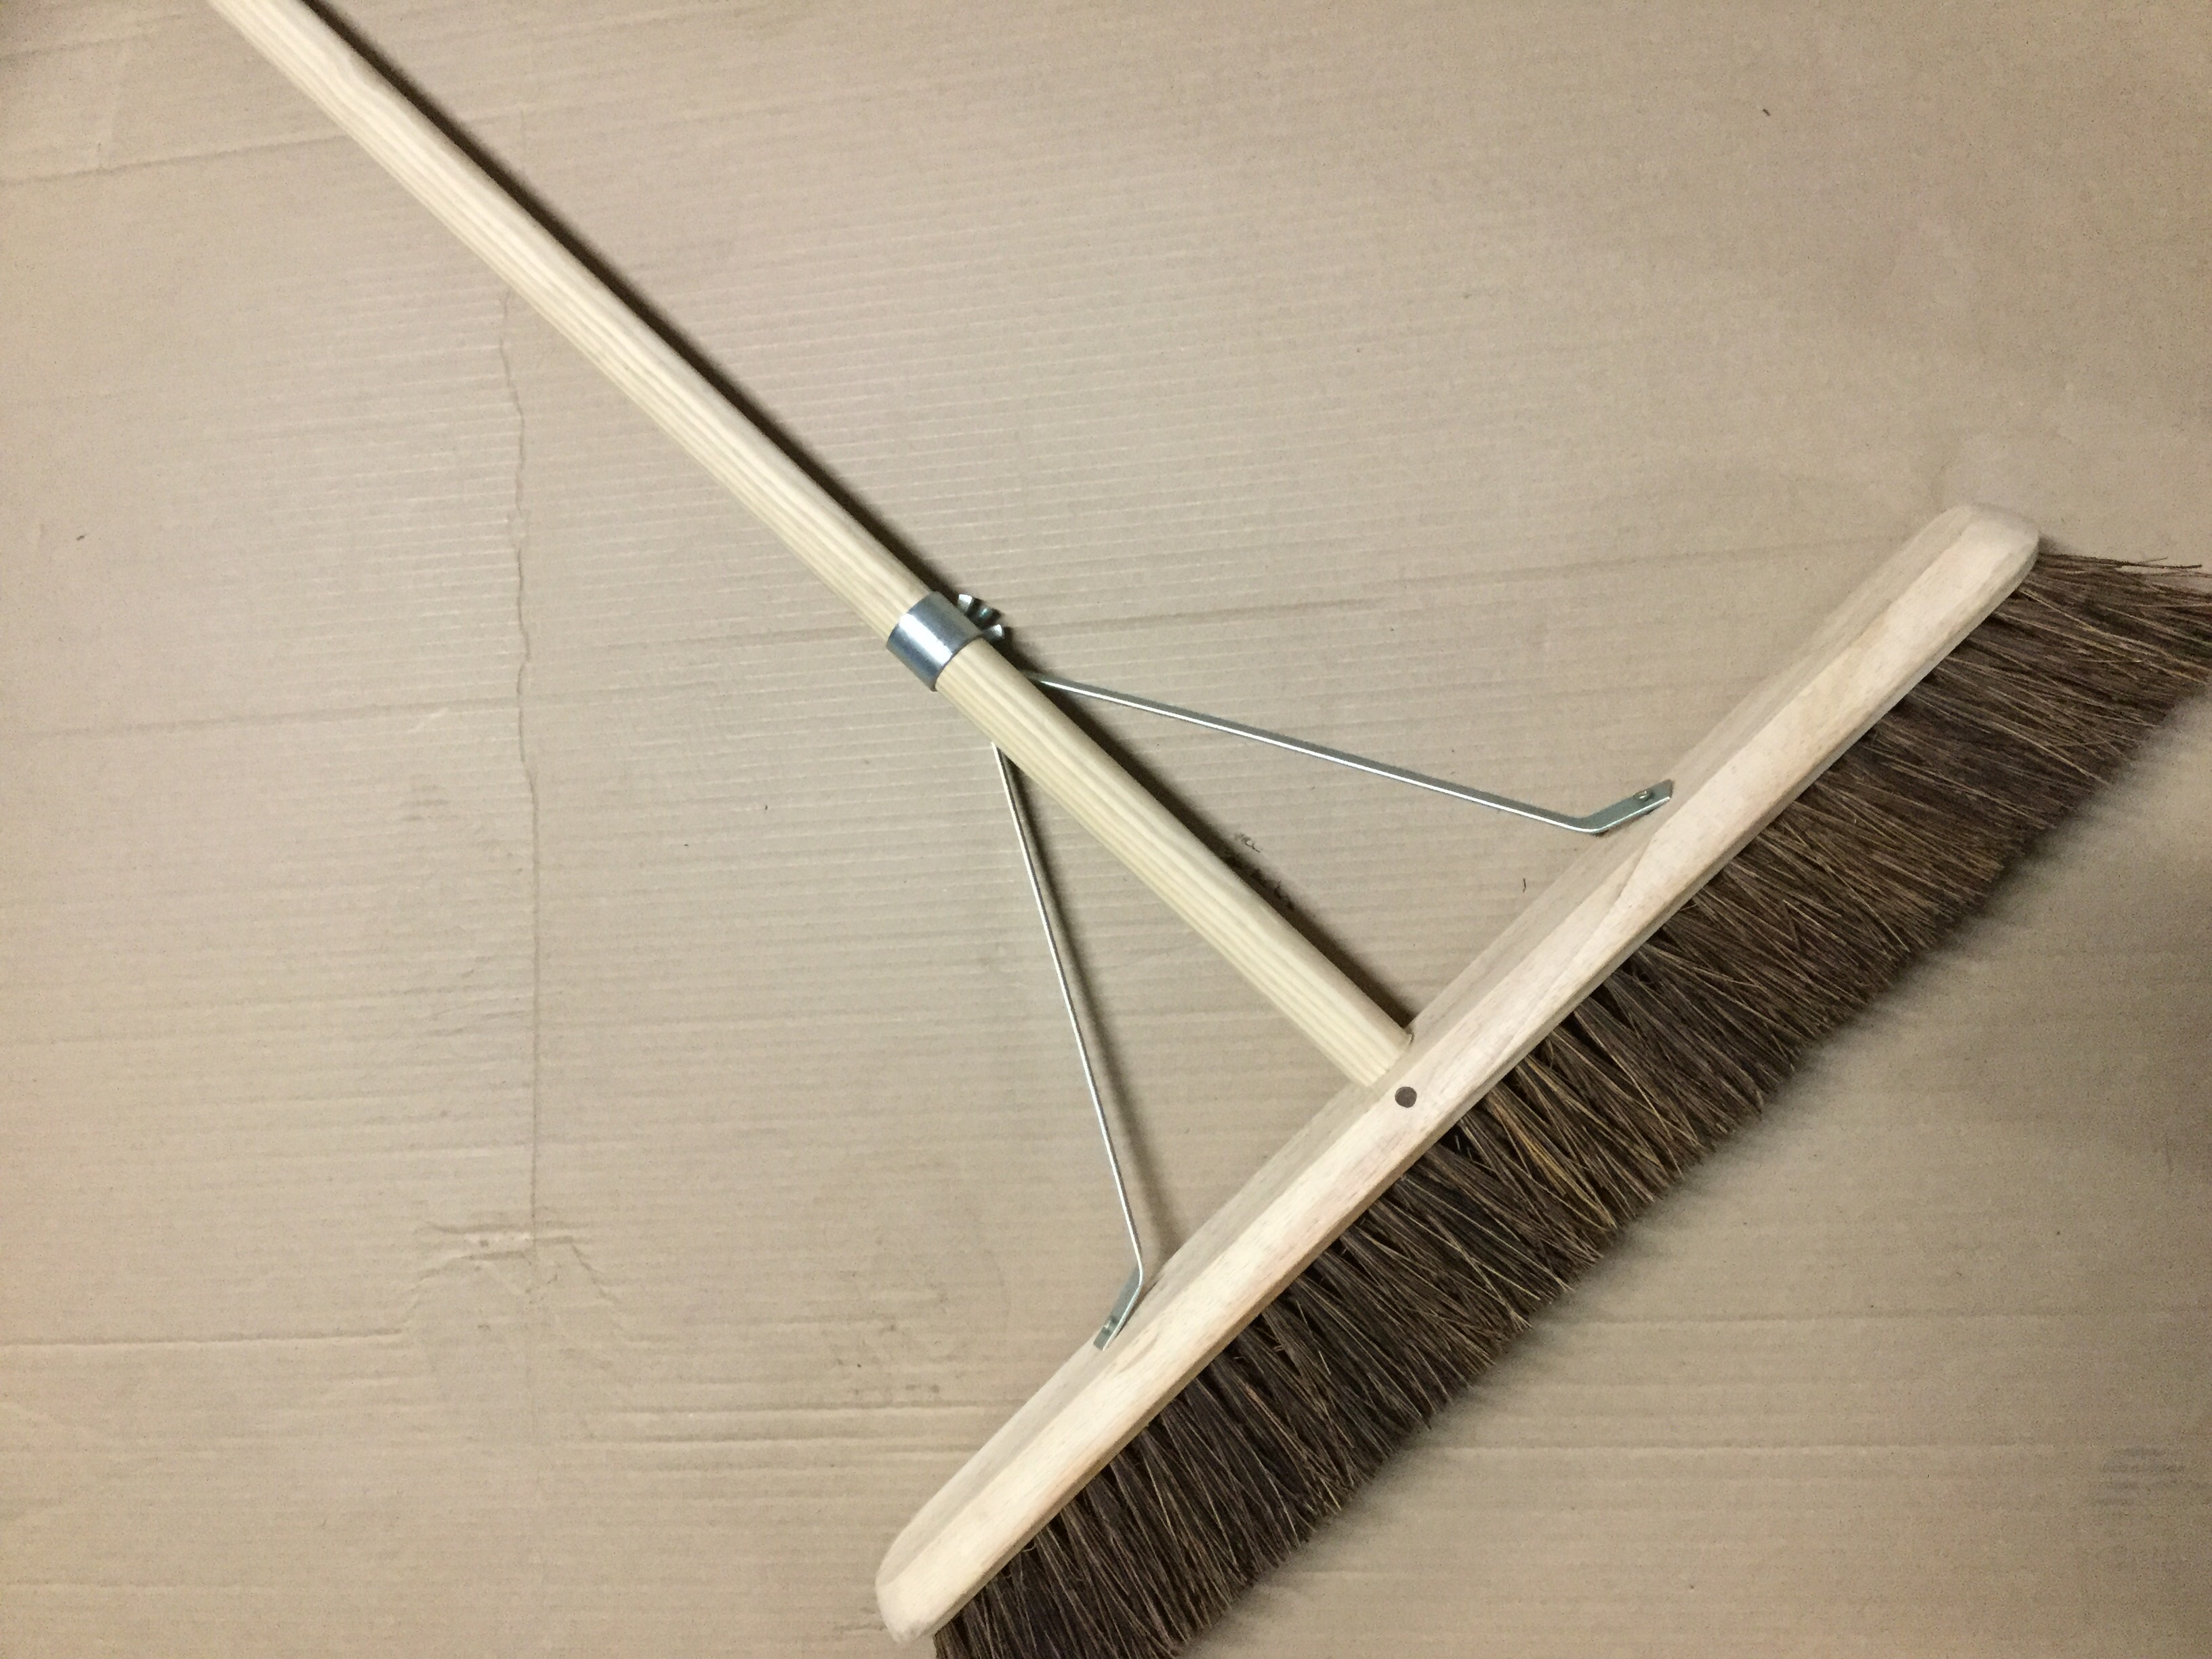 Sweeping brush